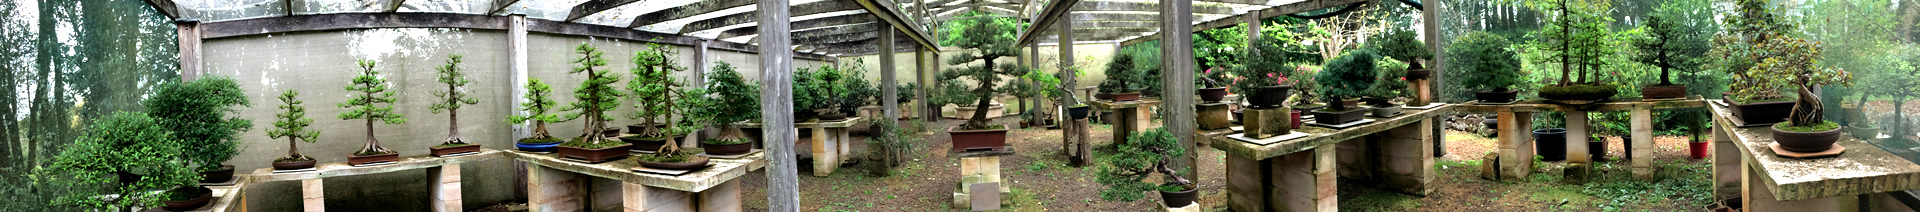 australian bonsai gallery banner 01